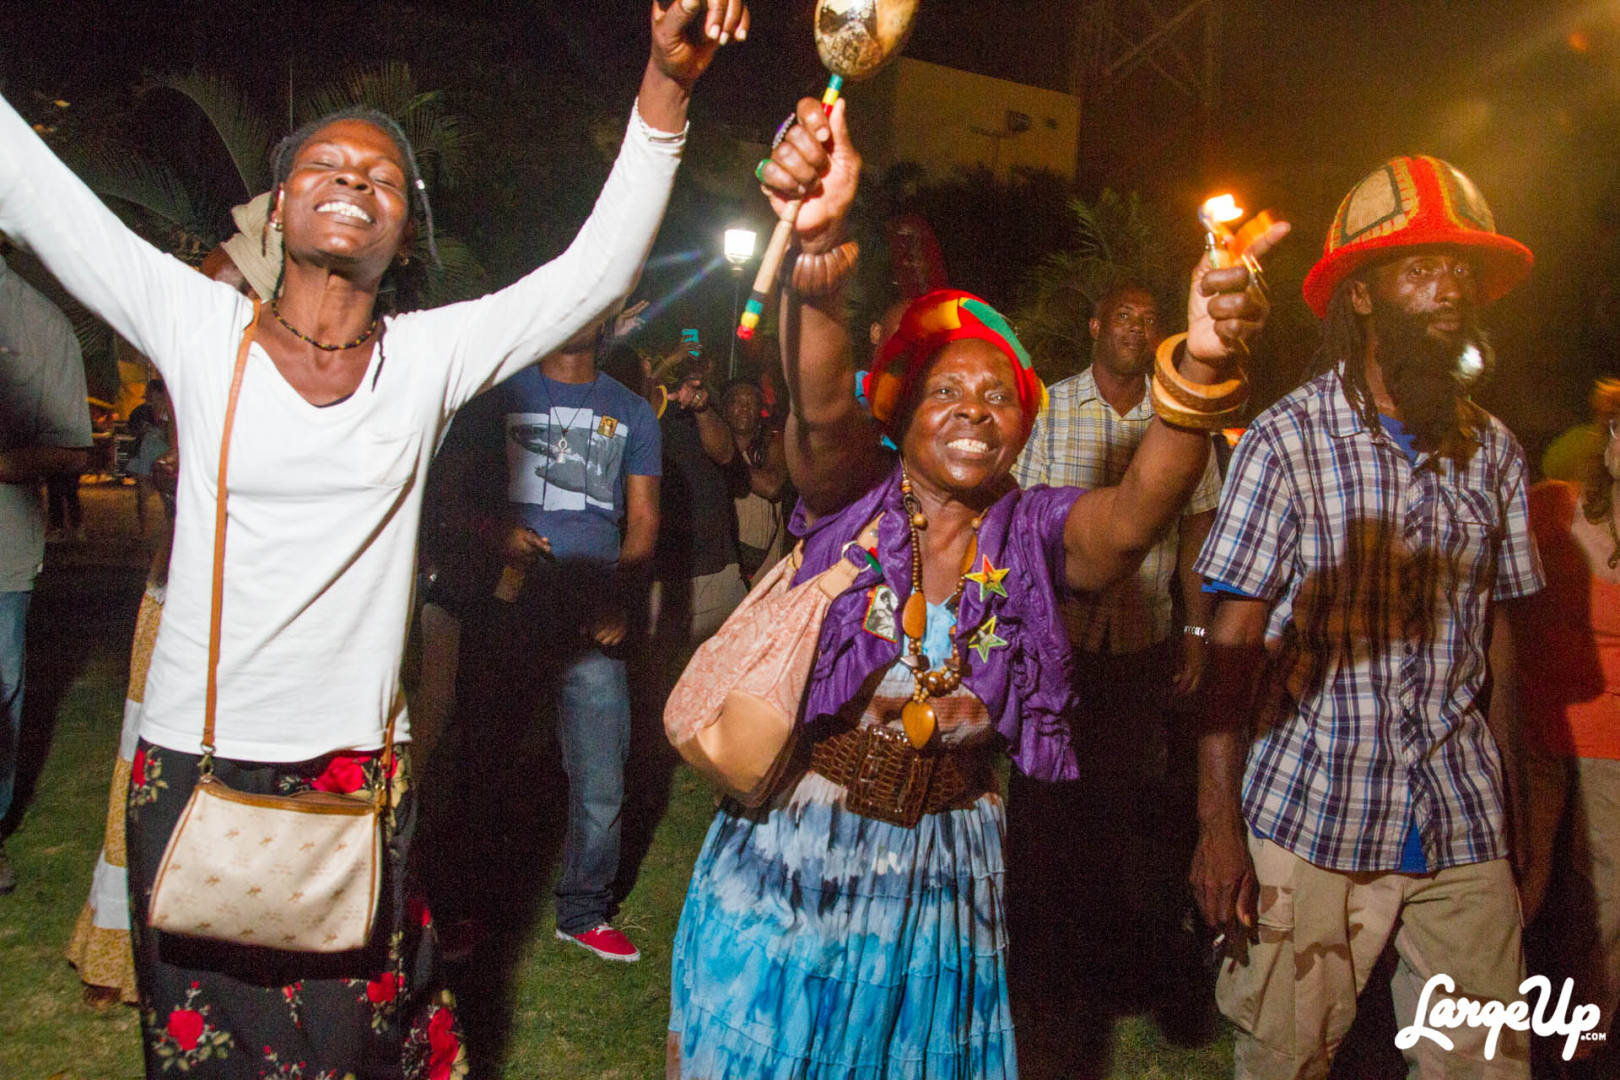 Impressions Photos From International Reggae Day in Kingston, Jamaica